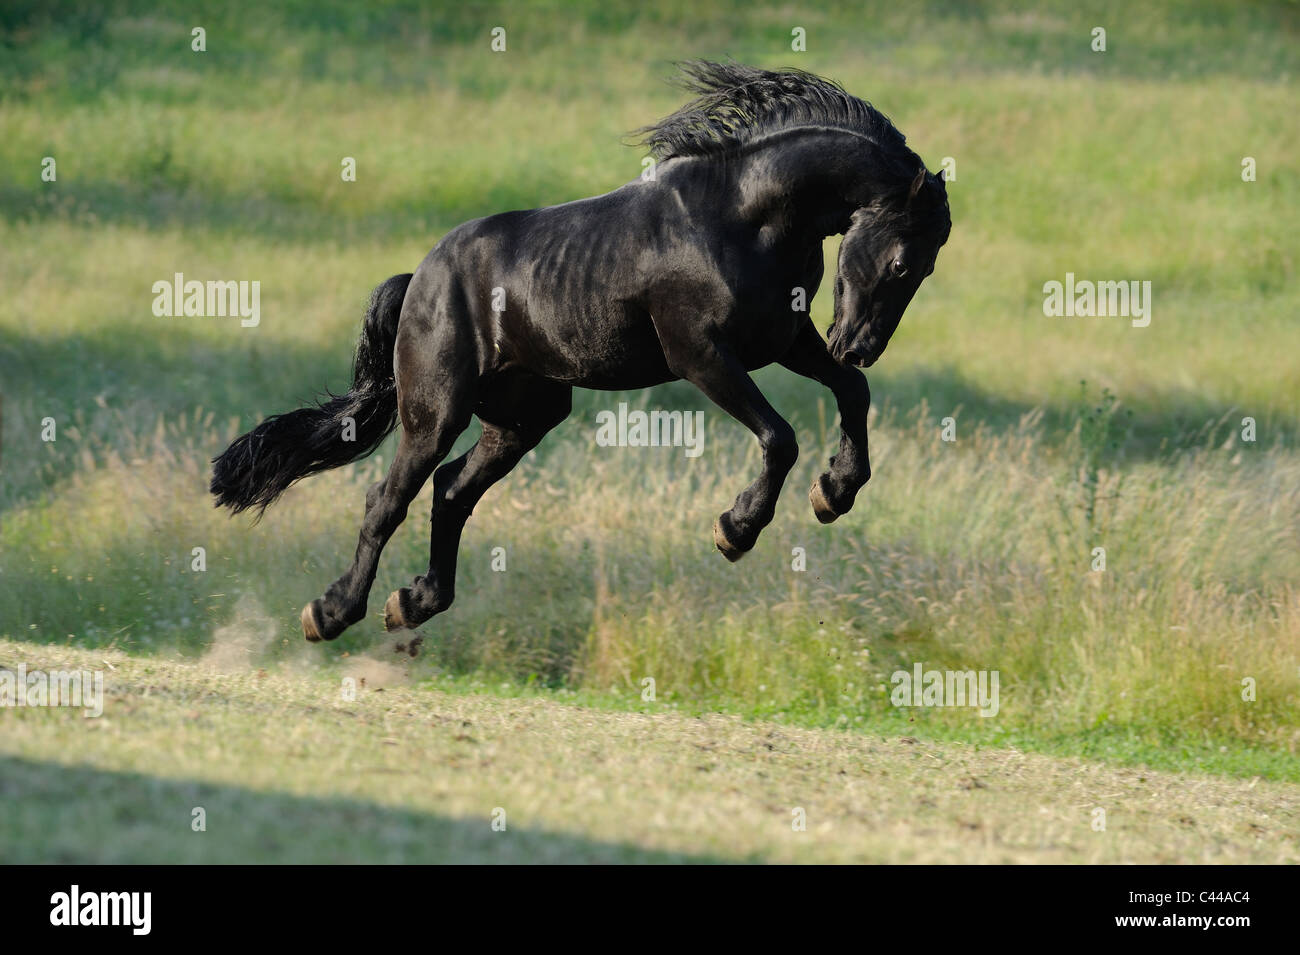 Friesian Horse (Equus ferus caballus). Stallion bucking on a meadow. Stock Photo